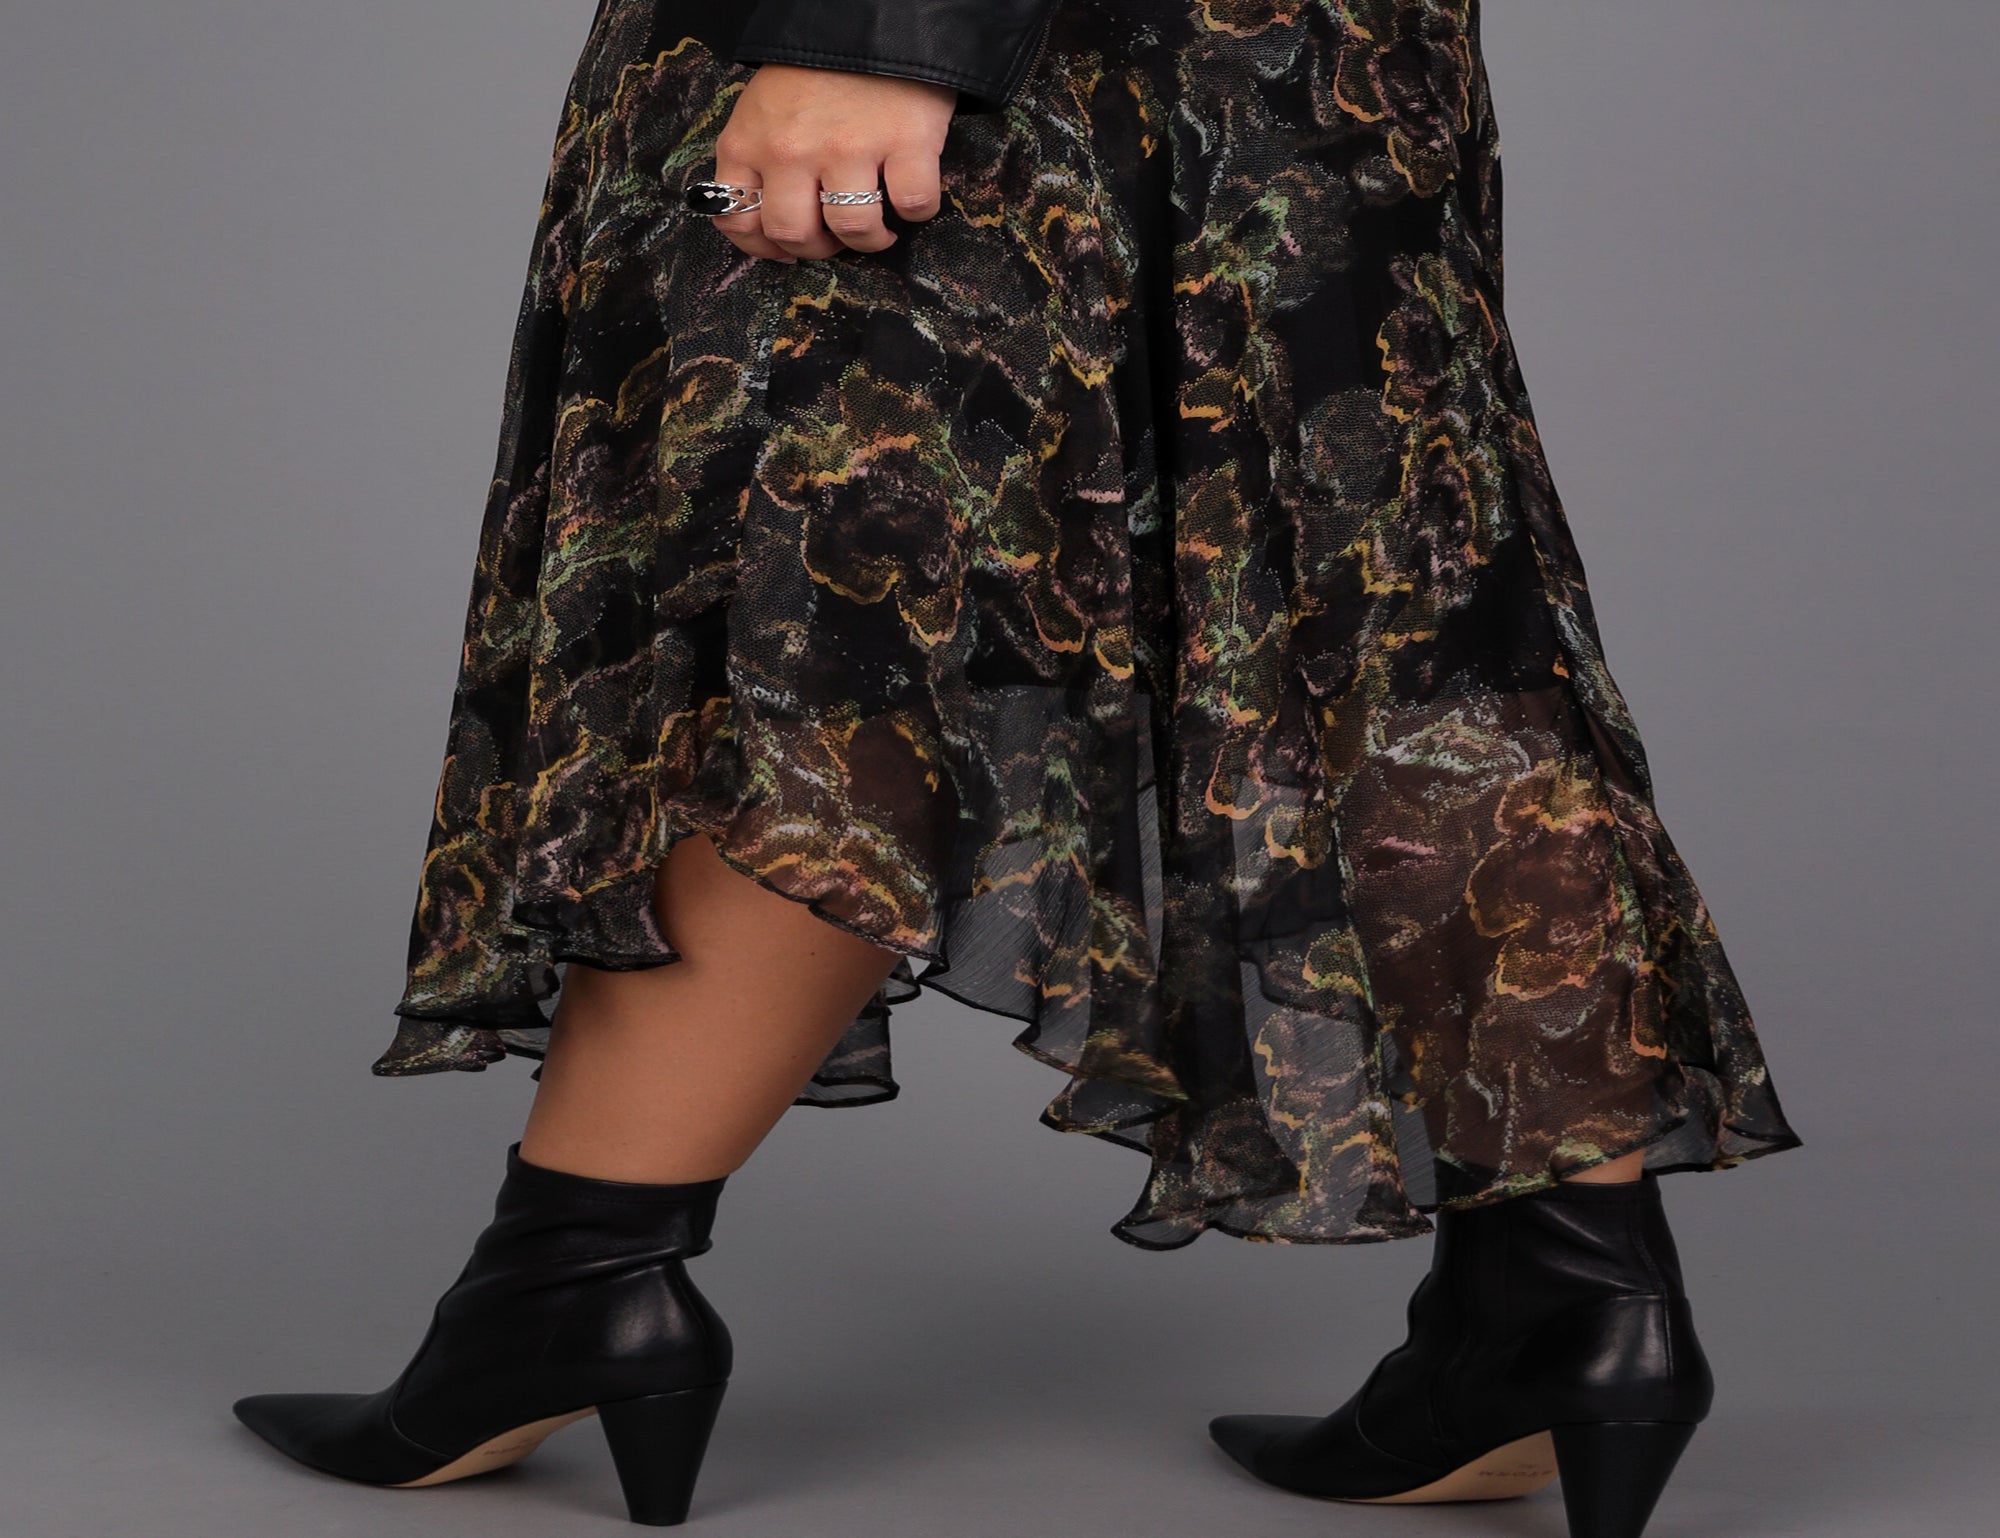 Mosaic Gold Print Midi Skirt - Multi - Skirts - Long - Women's Clothing ...